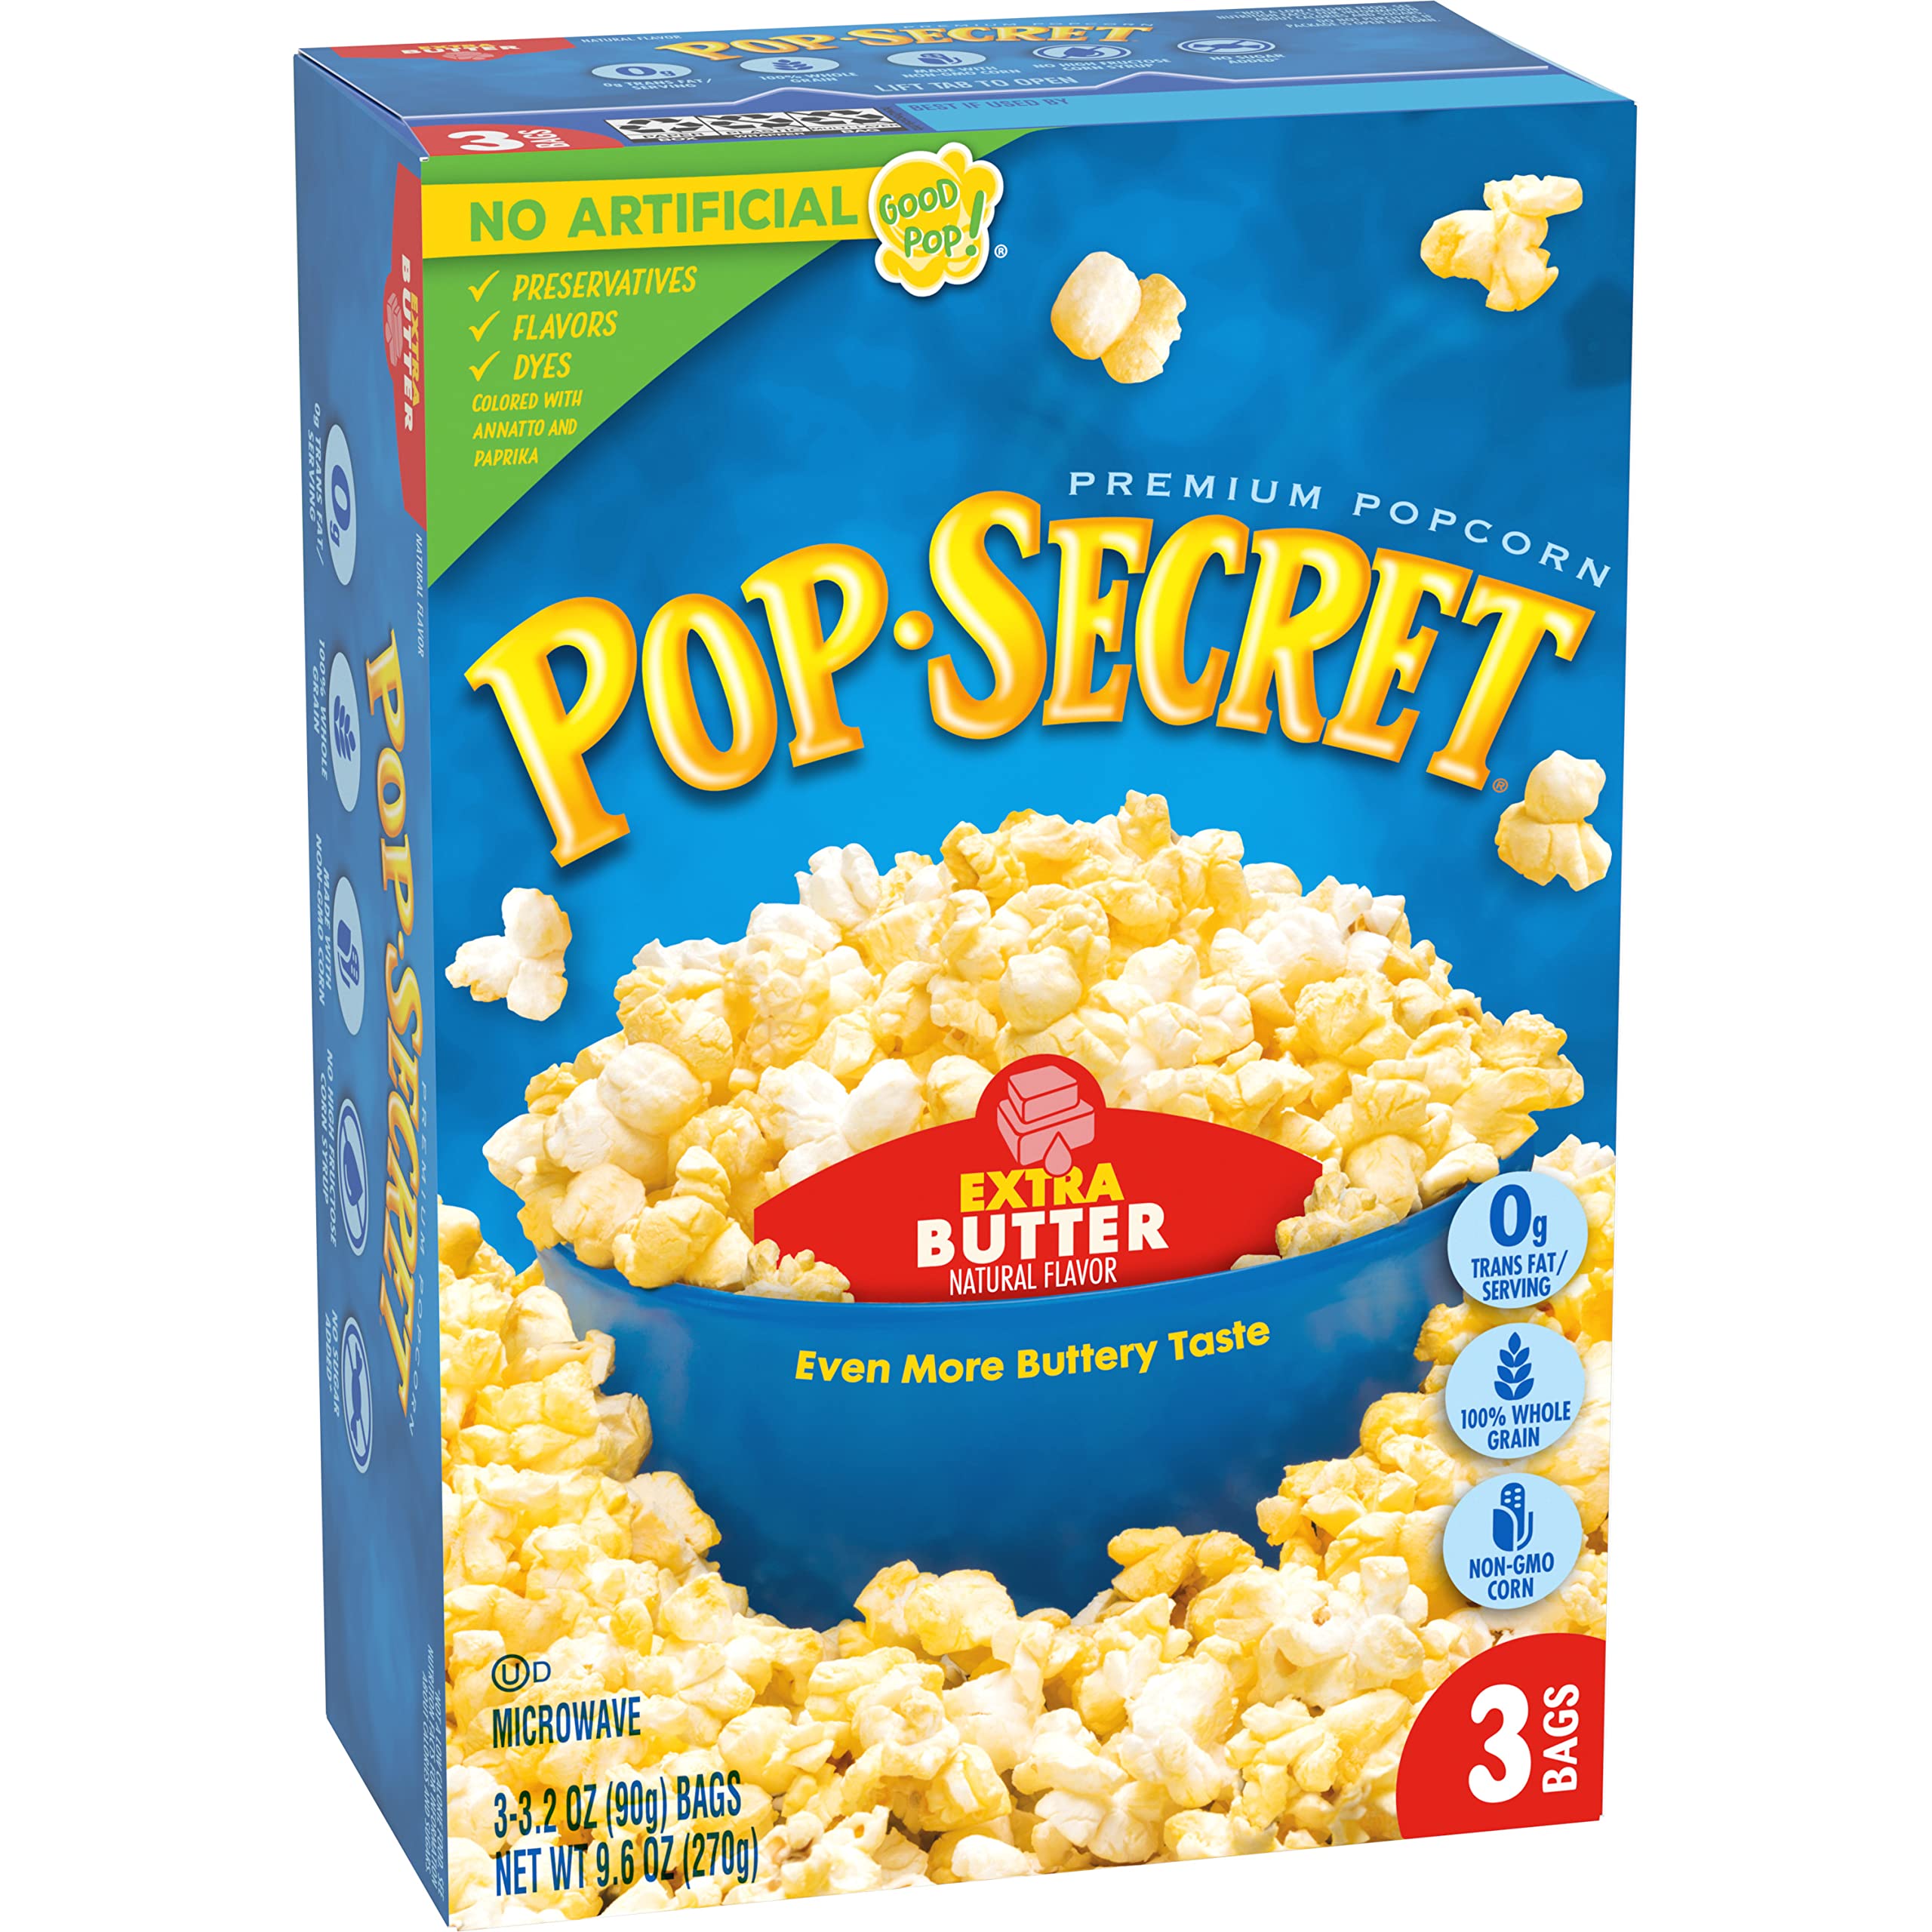 Pop Secret Microwave Popcorn, Extra Butter Flavor, 3.2 Oz Sharing Bags, 3 Ct $1.79